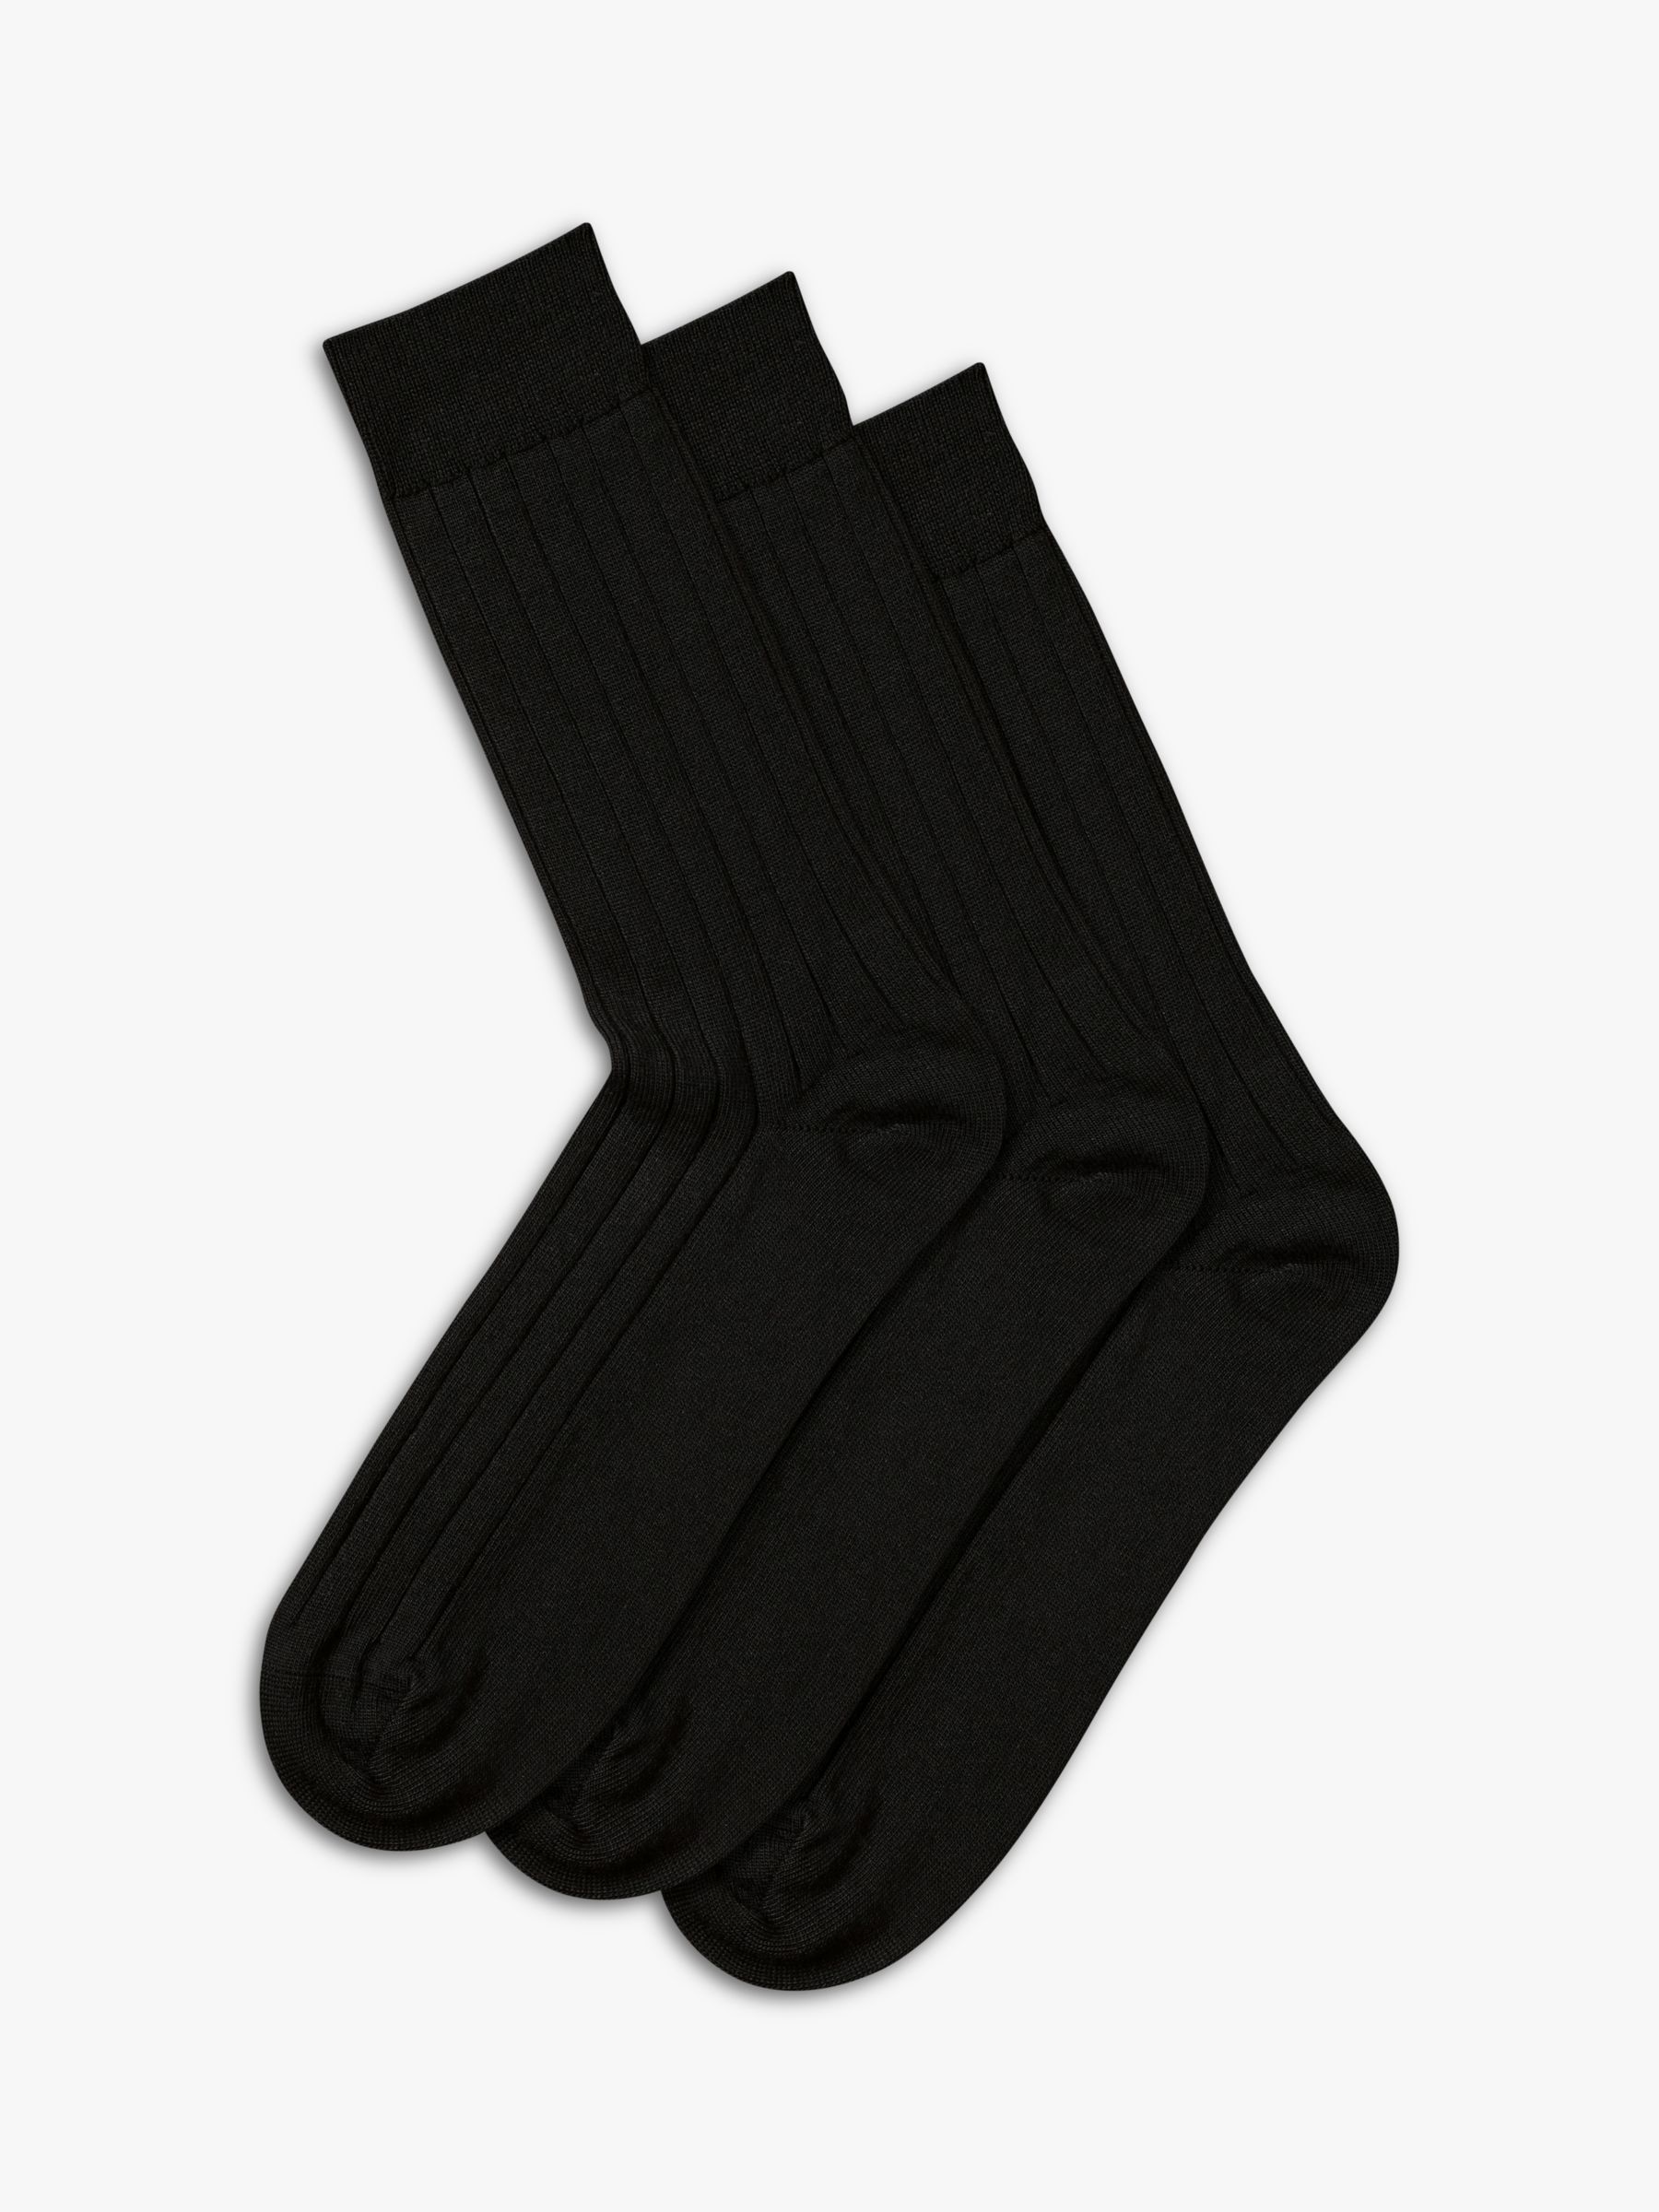 Charles Tyrwhitt Wool Rich Socks, Pack of 3, Black at John Lewis & Partners